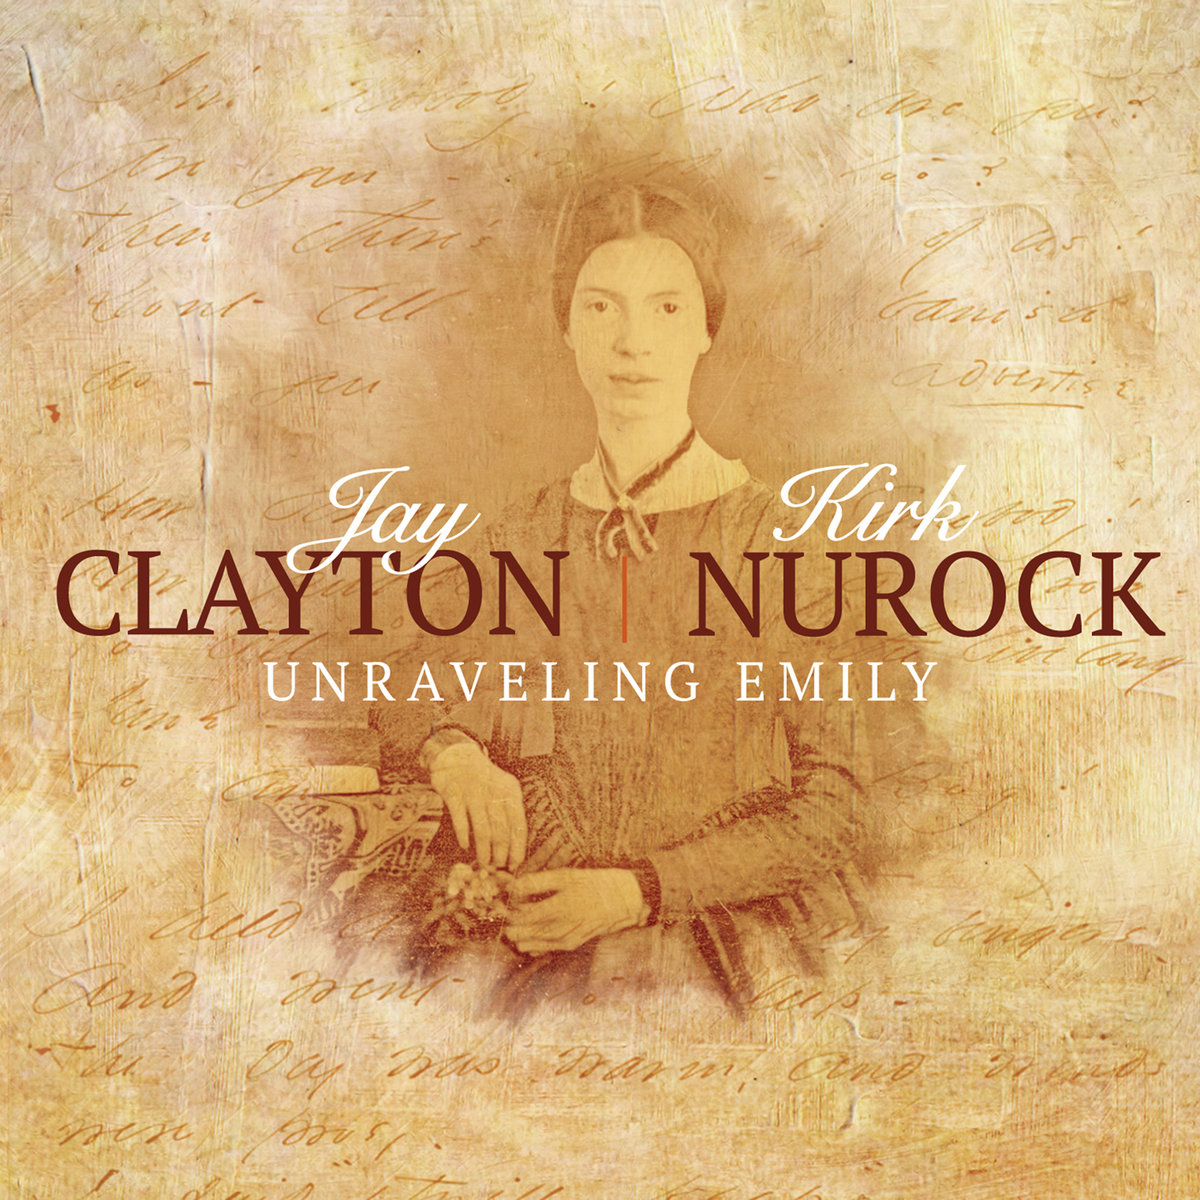 Jay Clayton & Kirk Nurock - Unraveling Emily (2013) [FLAC 24bit/44,1kHz]